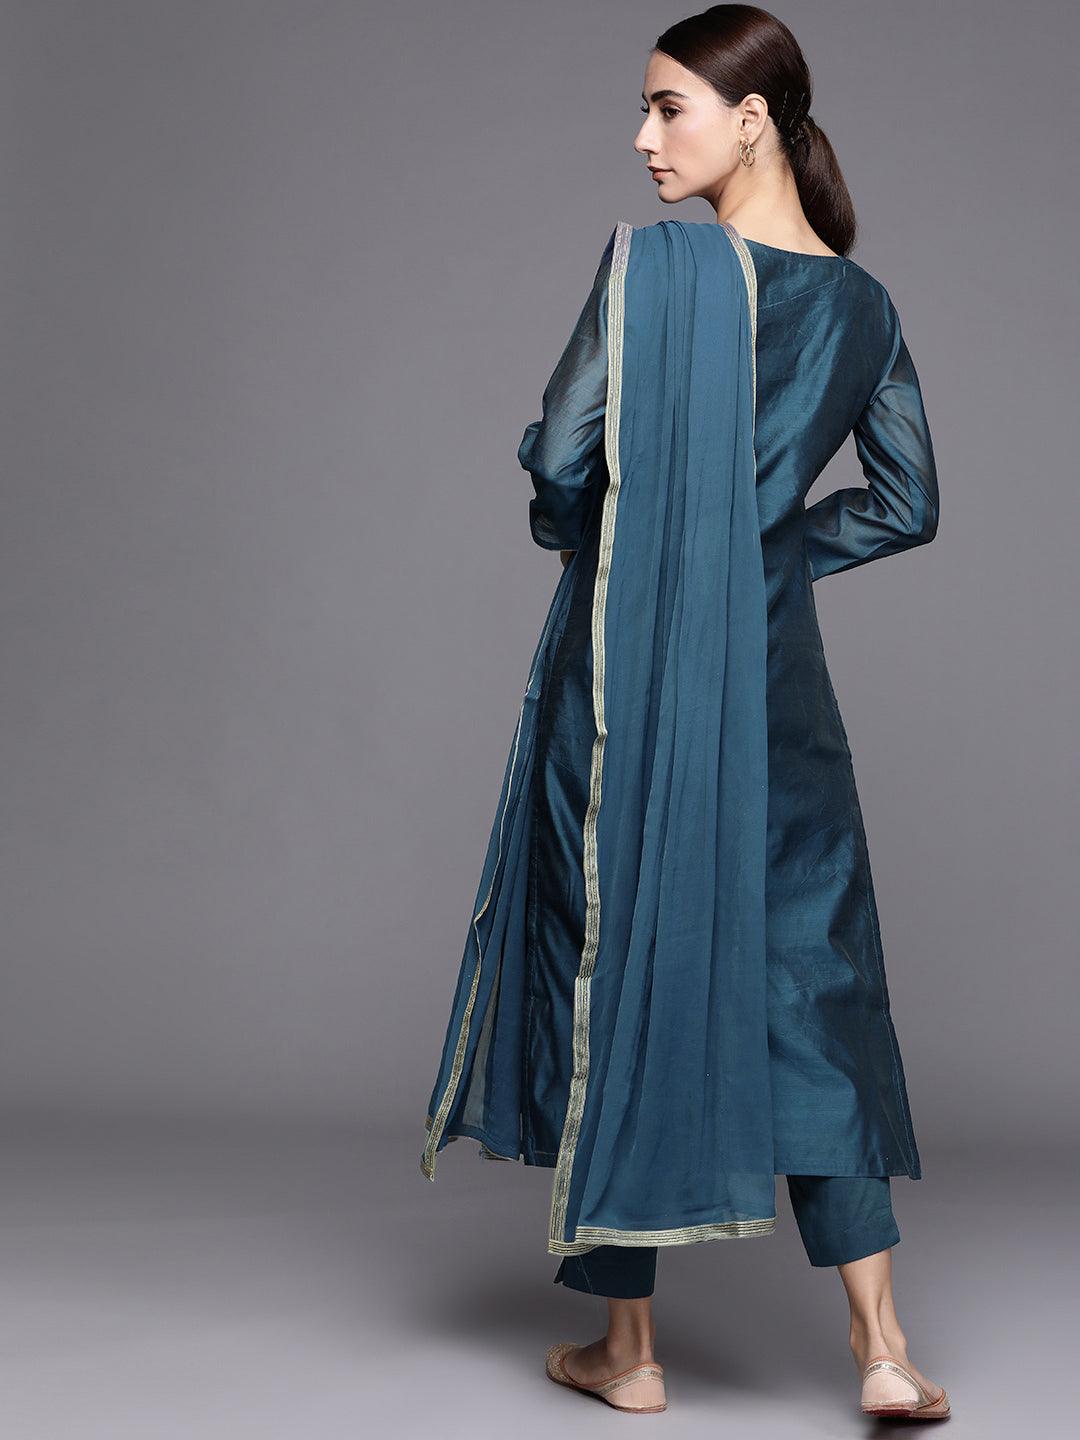 Teal Embroidered Chanderi Silk Suit Set - Libas